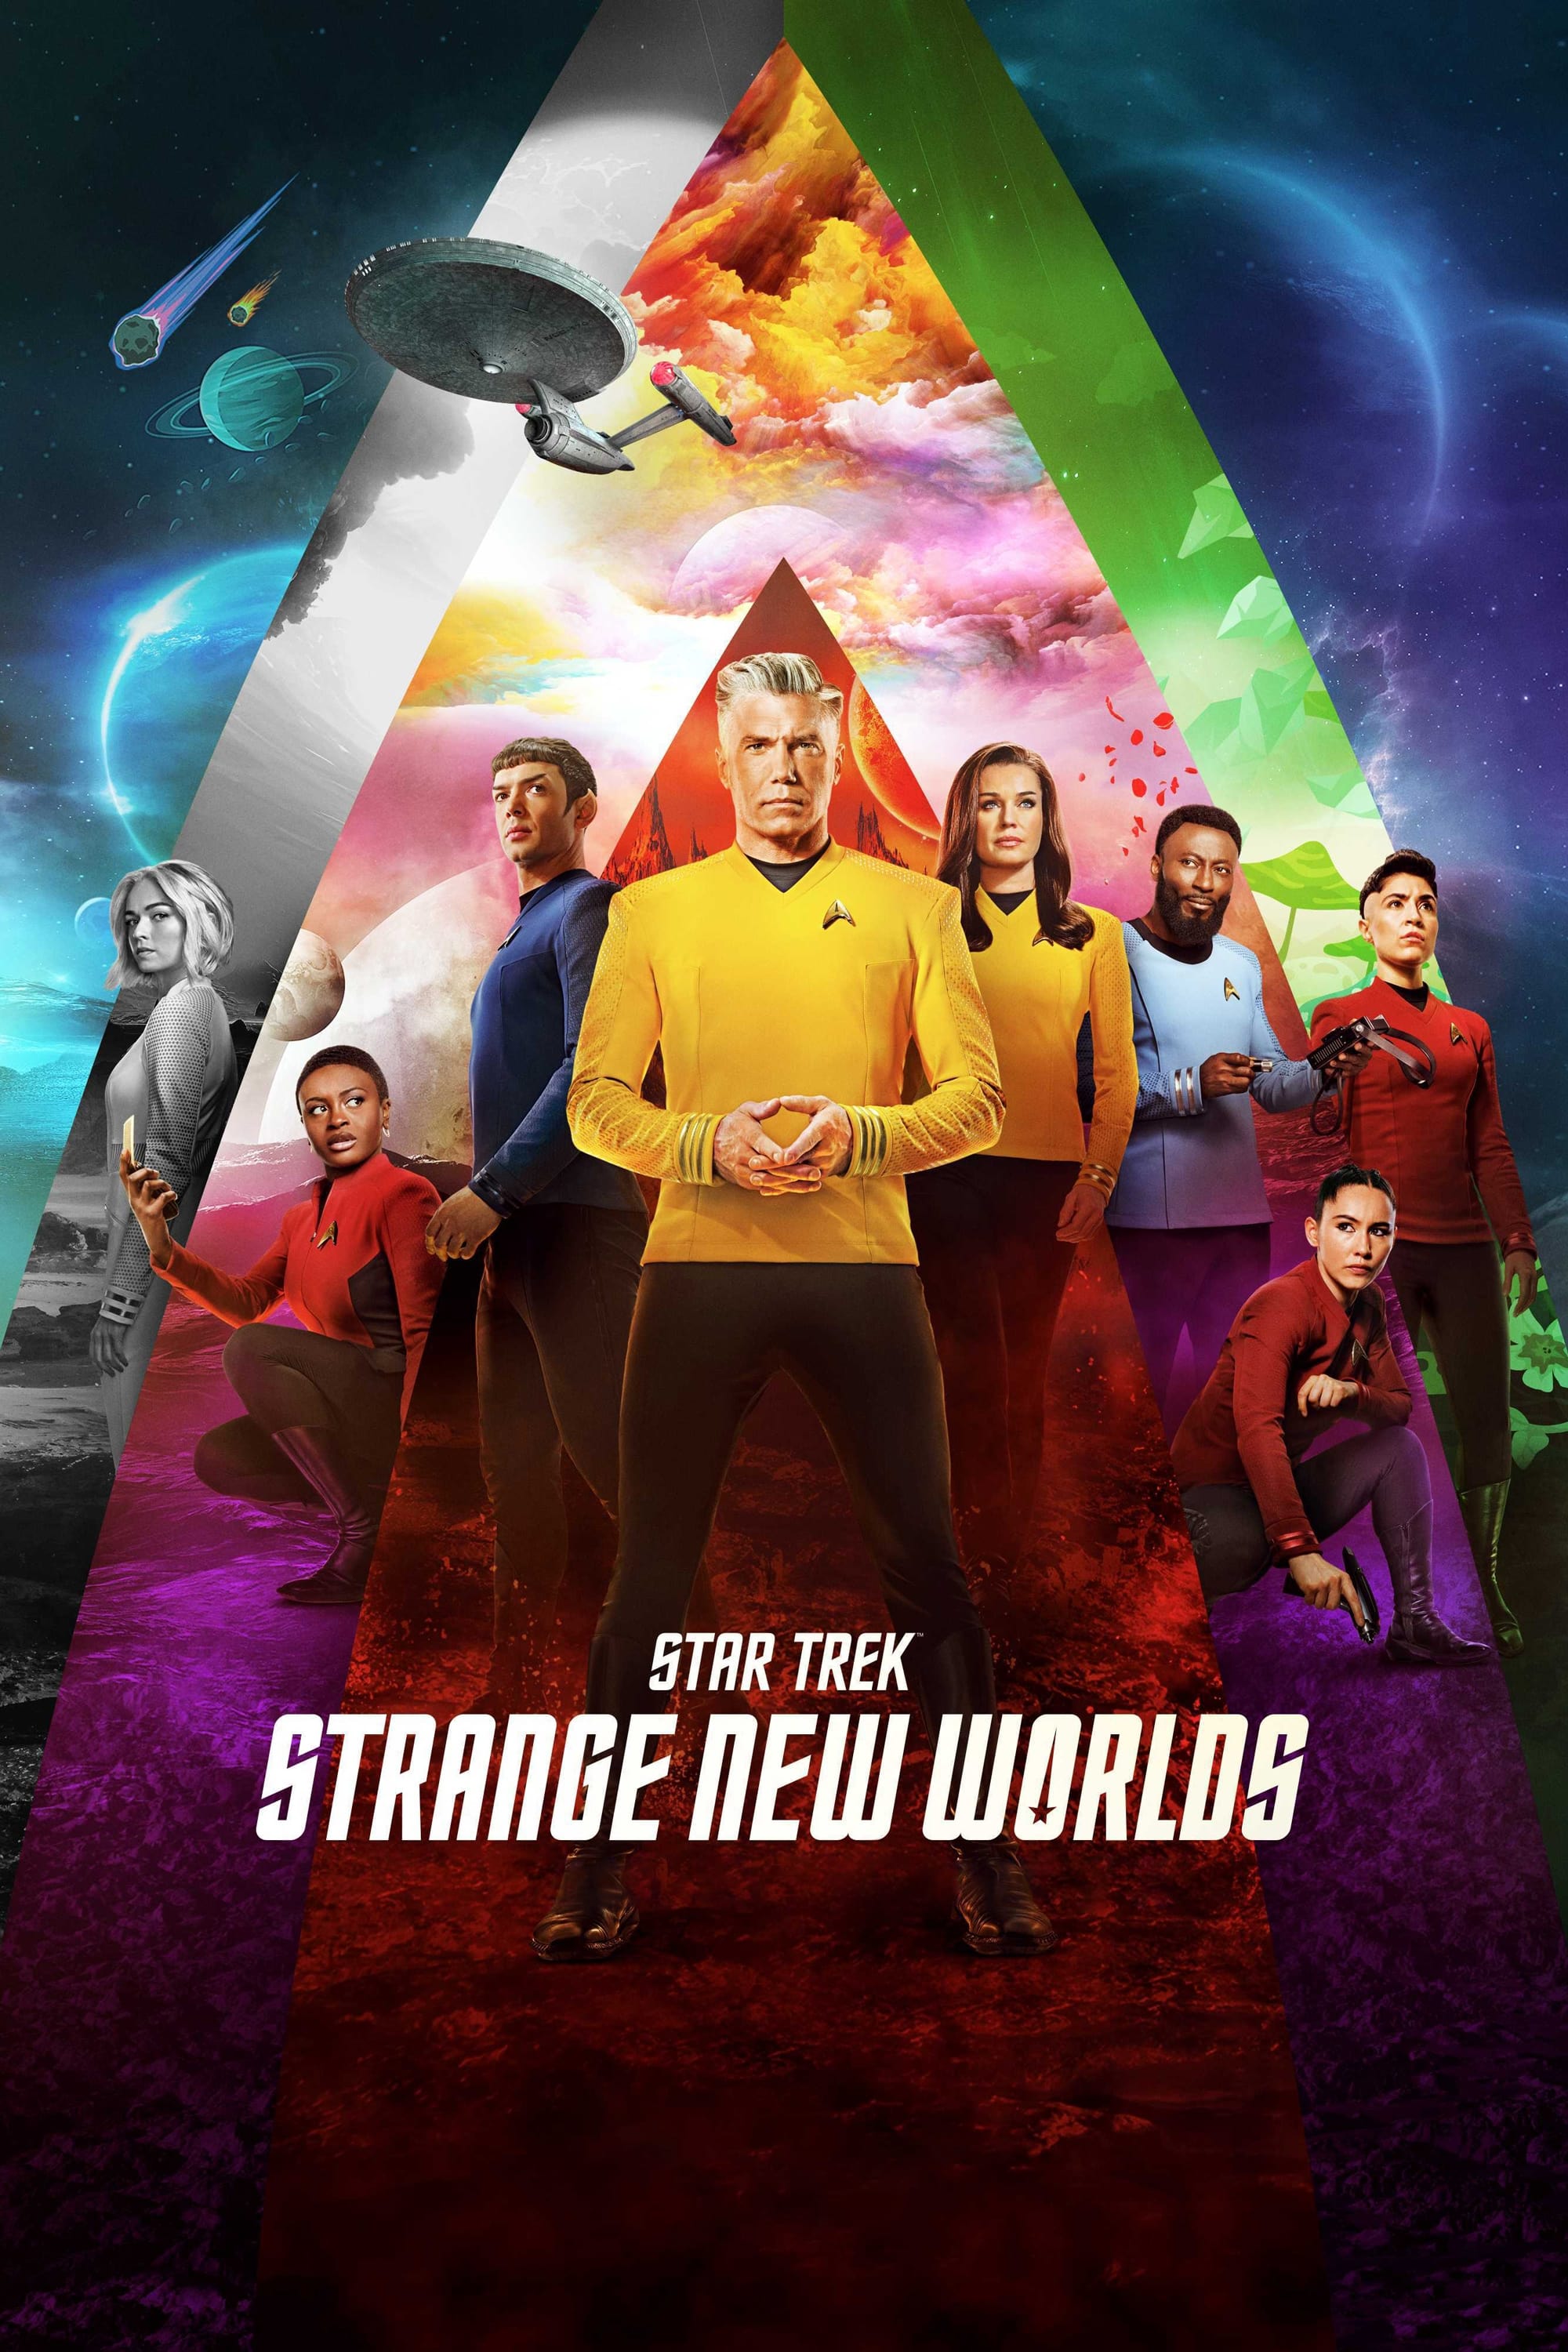 Star Trek: Strange New Worlds TV Shows About Alien